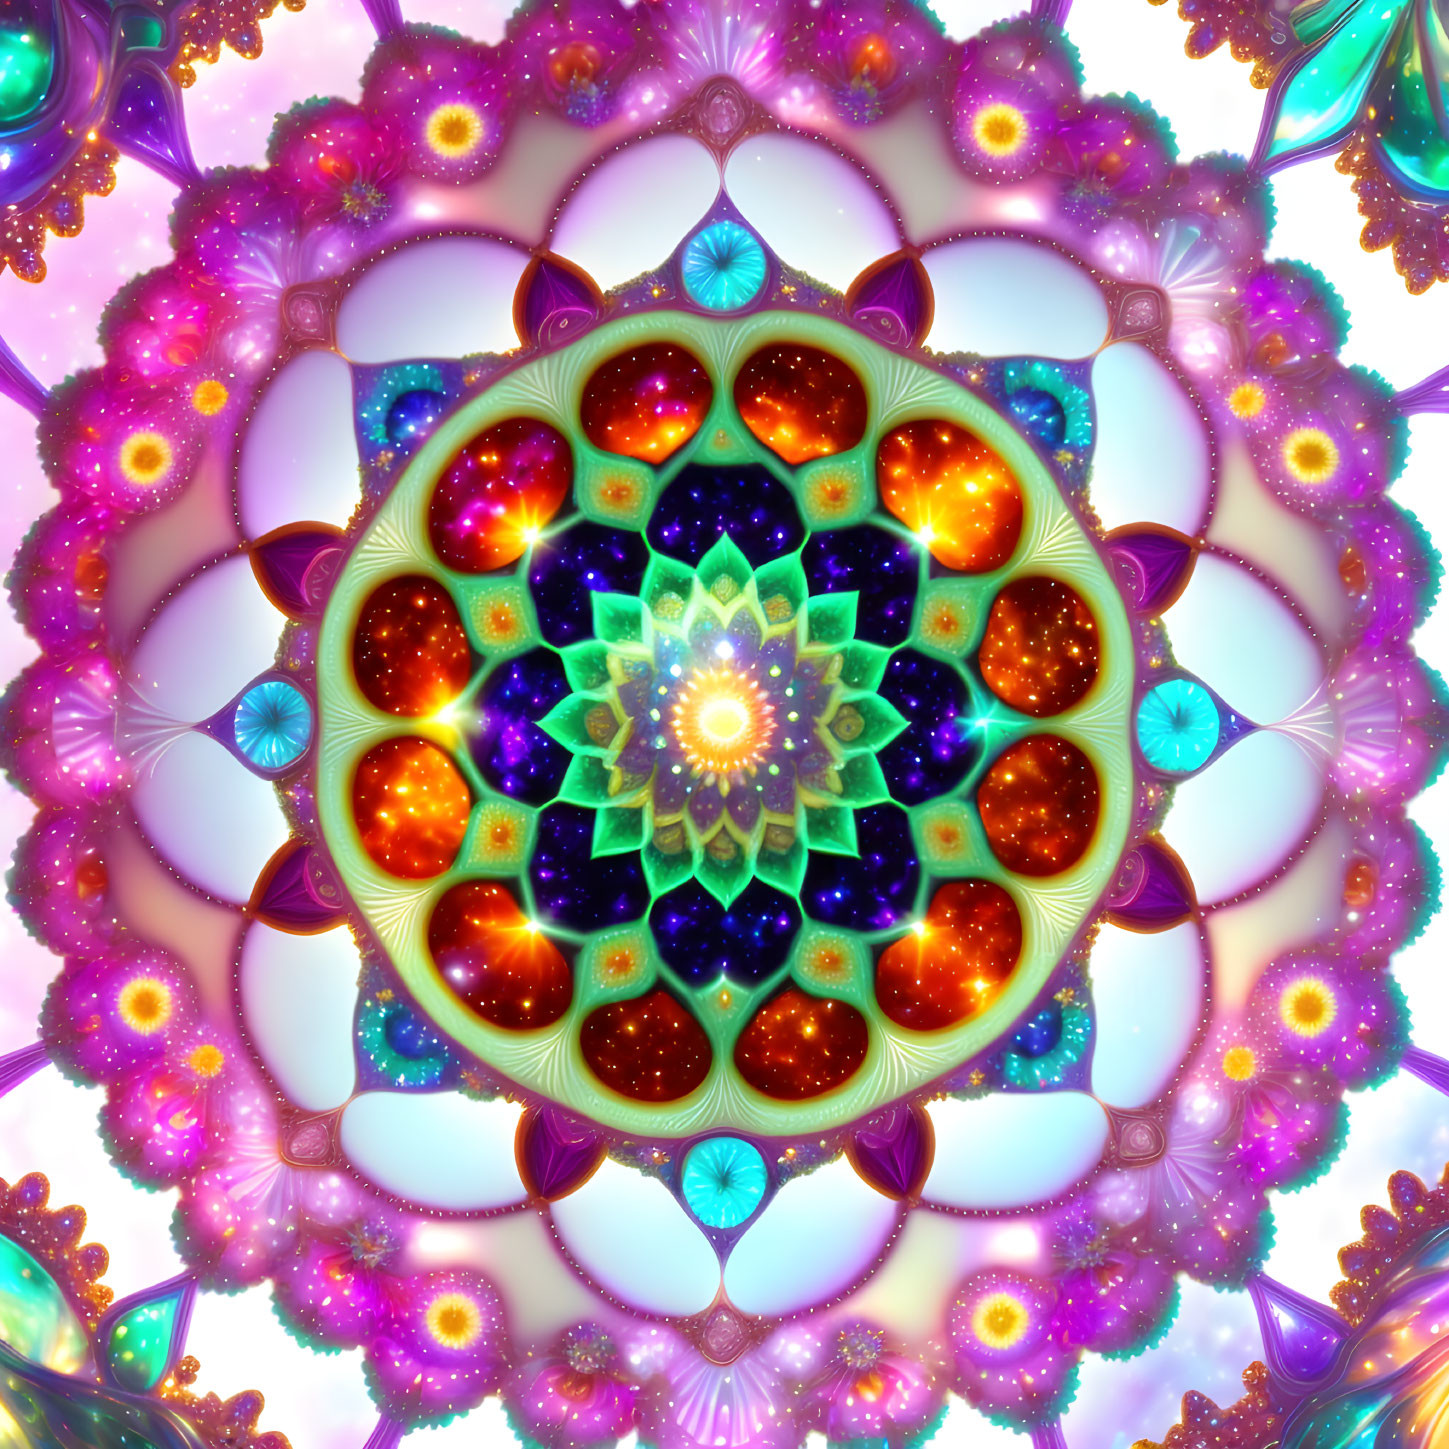 Symmetrical fractal design with kaleidoscopic pattern in purple-orange hues